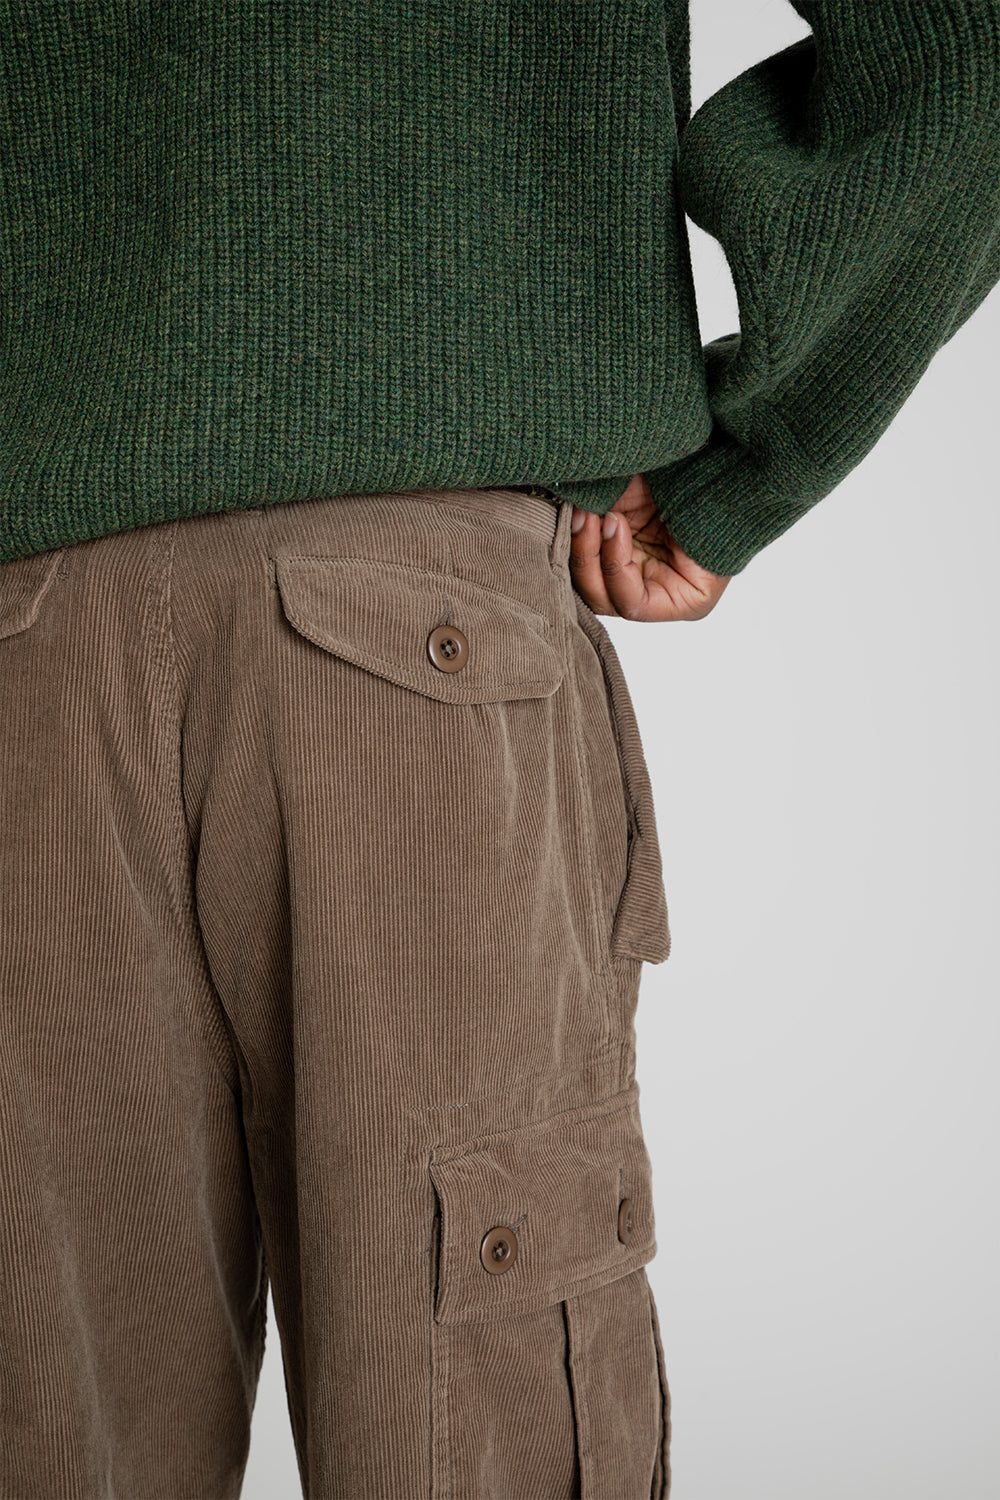 Frizmworks Corduroy M65 Field Pants Brown Detail 03